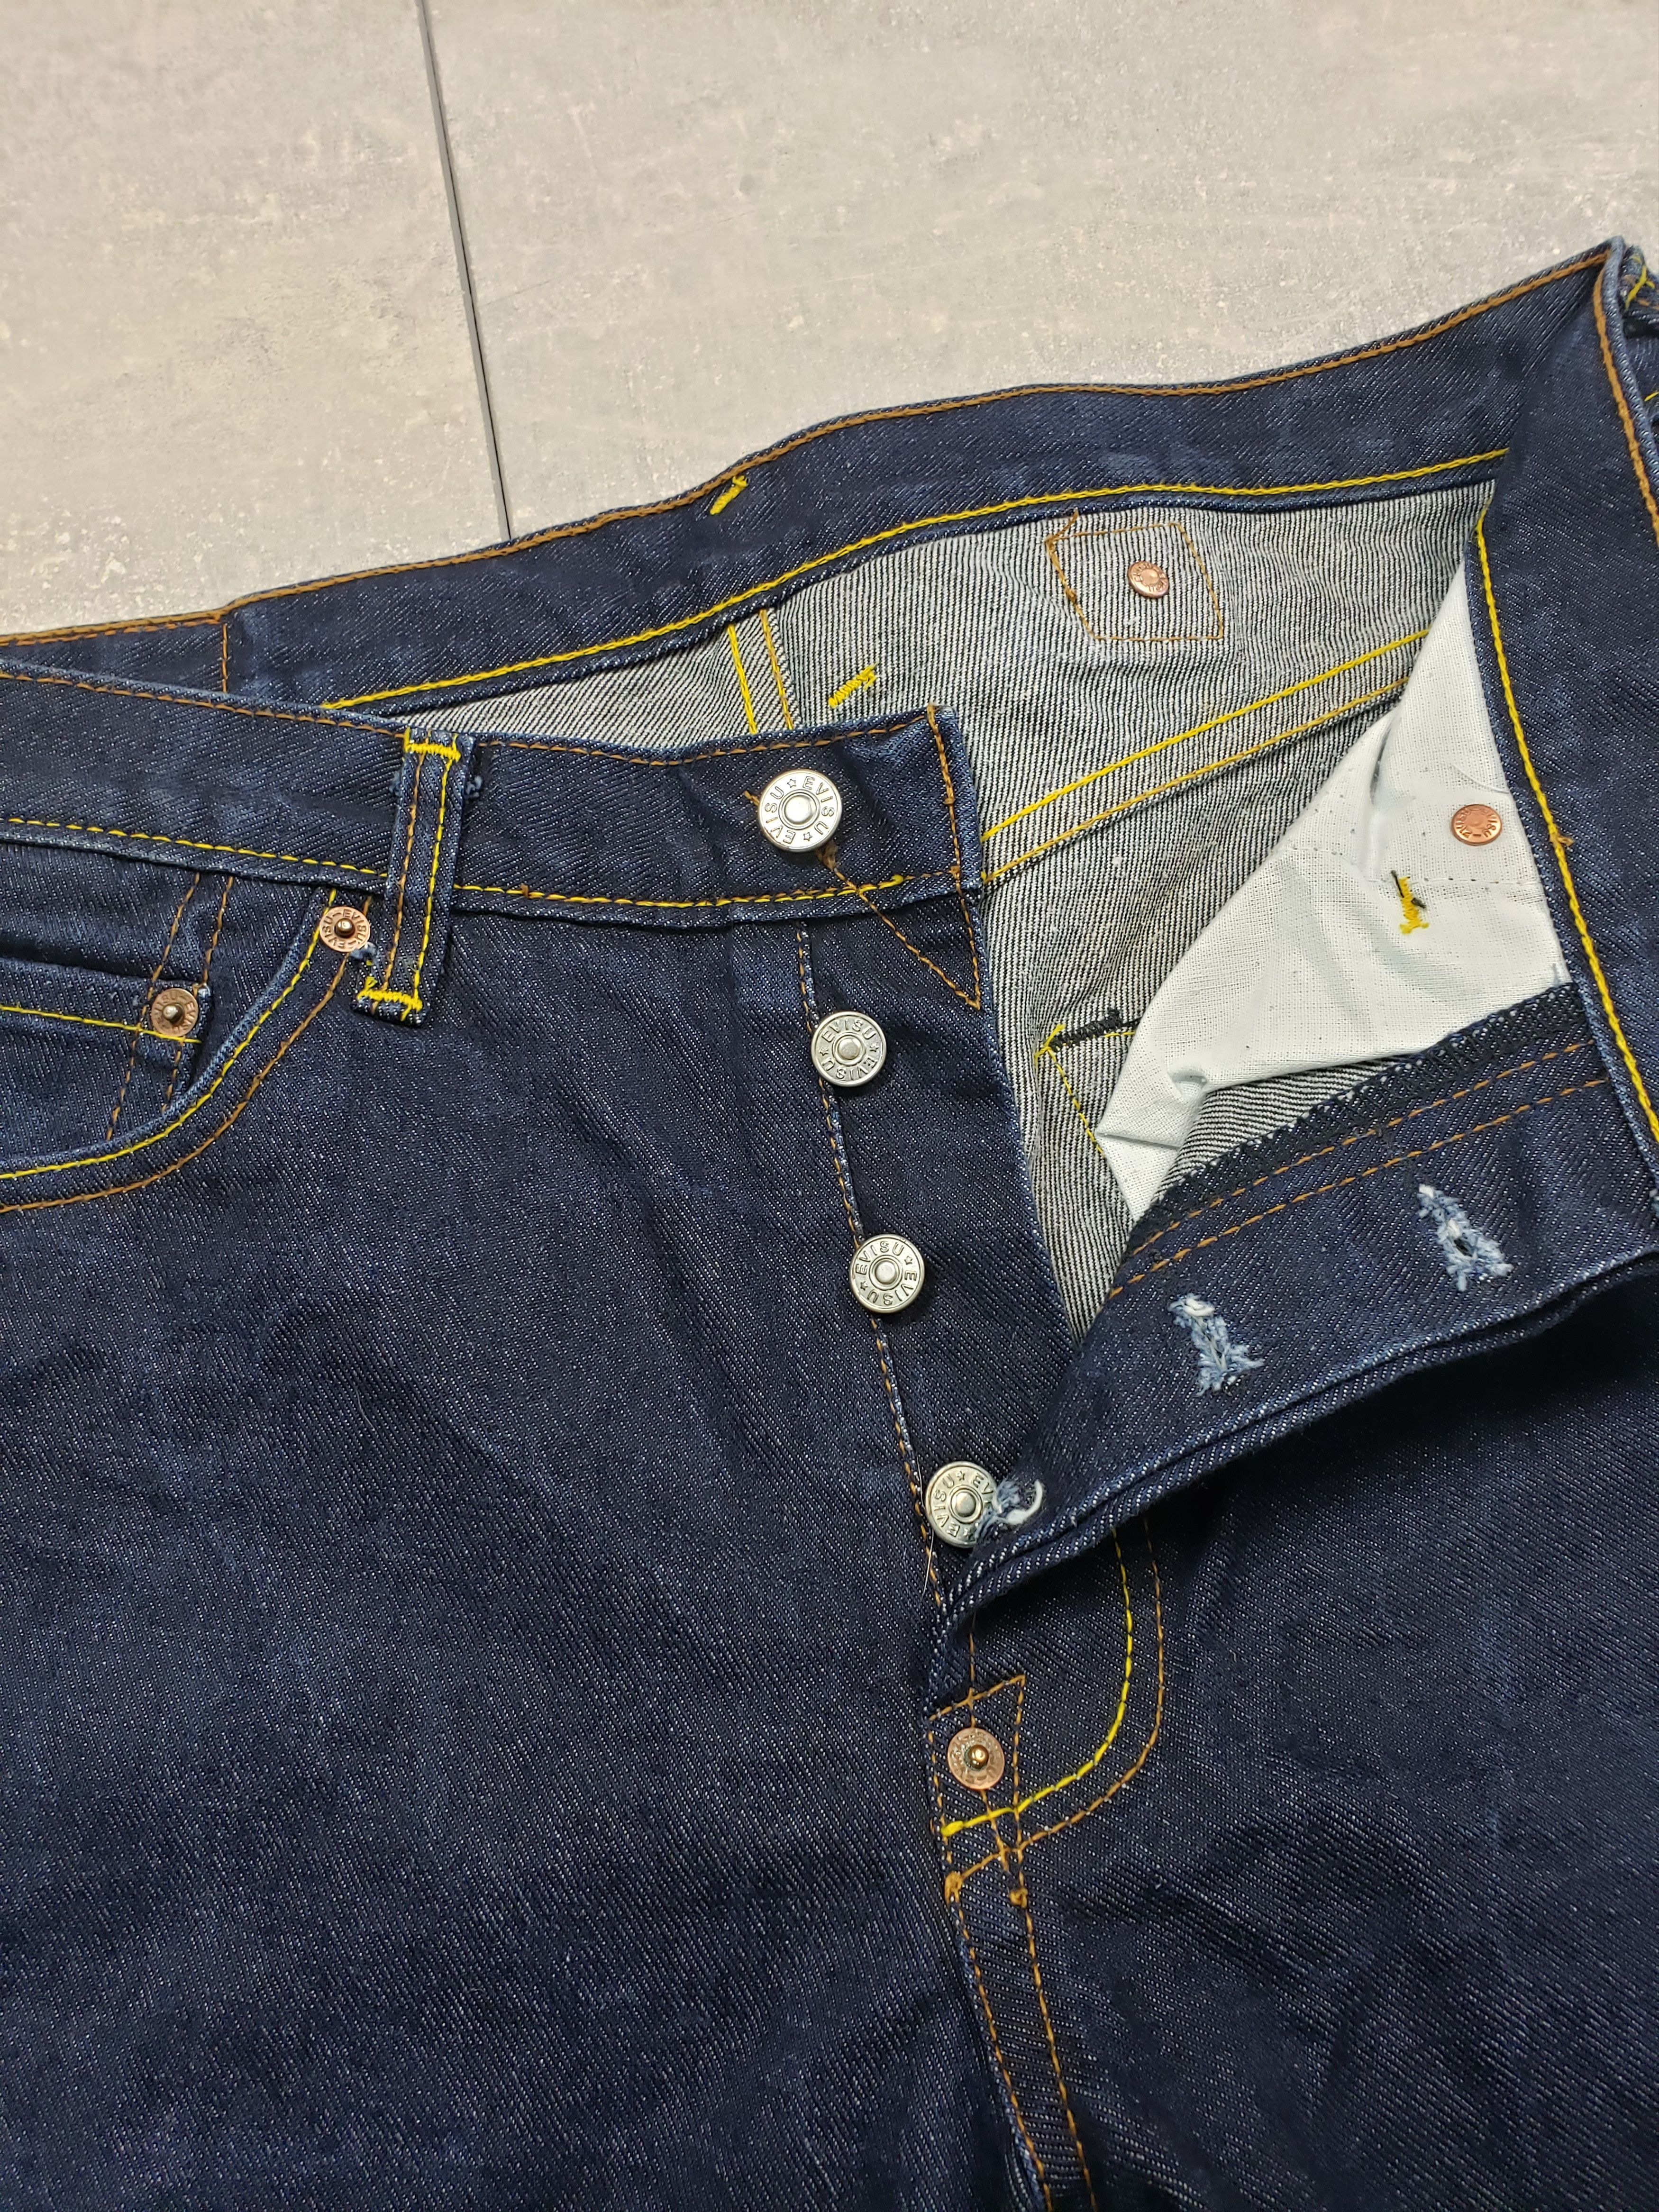 Evisu Evisu denim pants big logo jeans selvedge Size US 34 / EU 50 - 10 Thumbnail